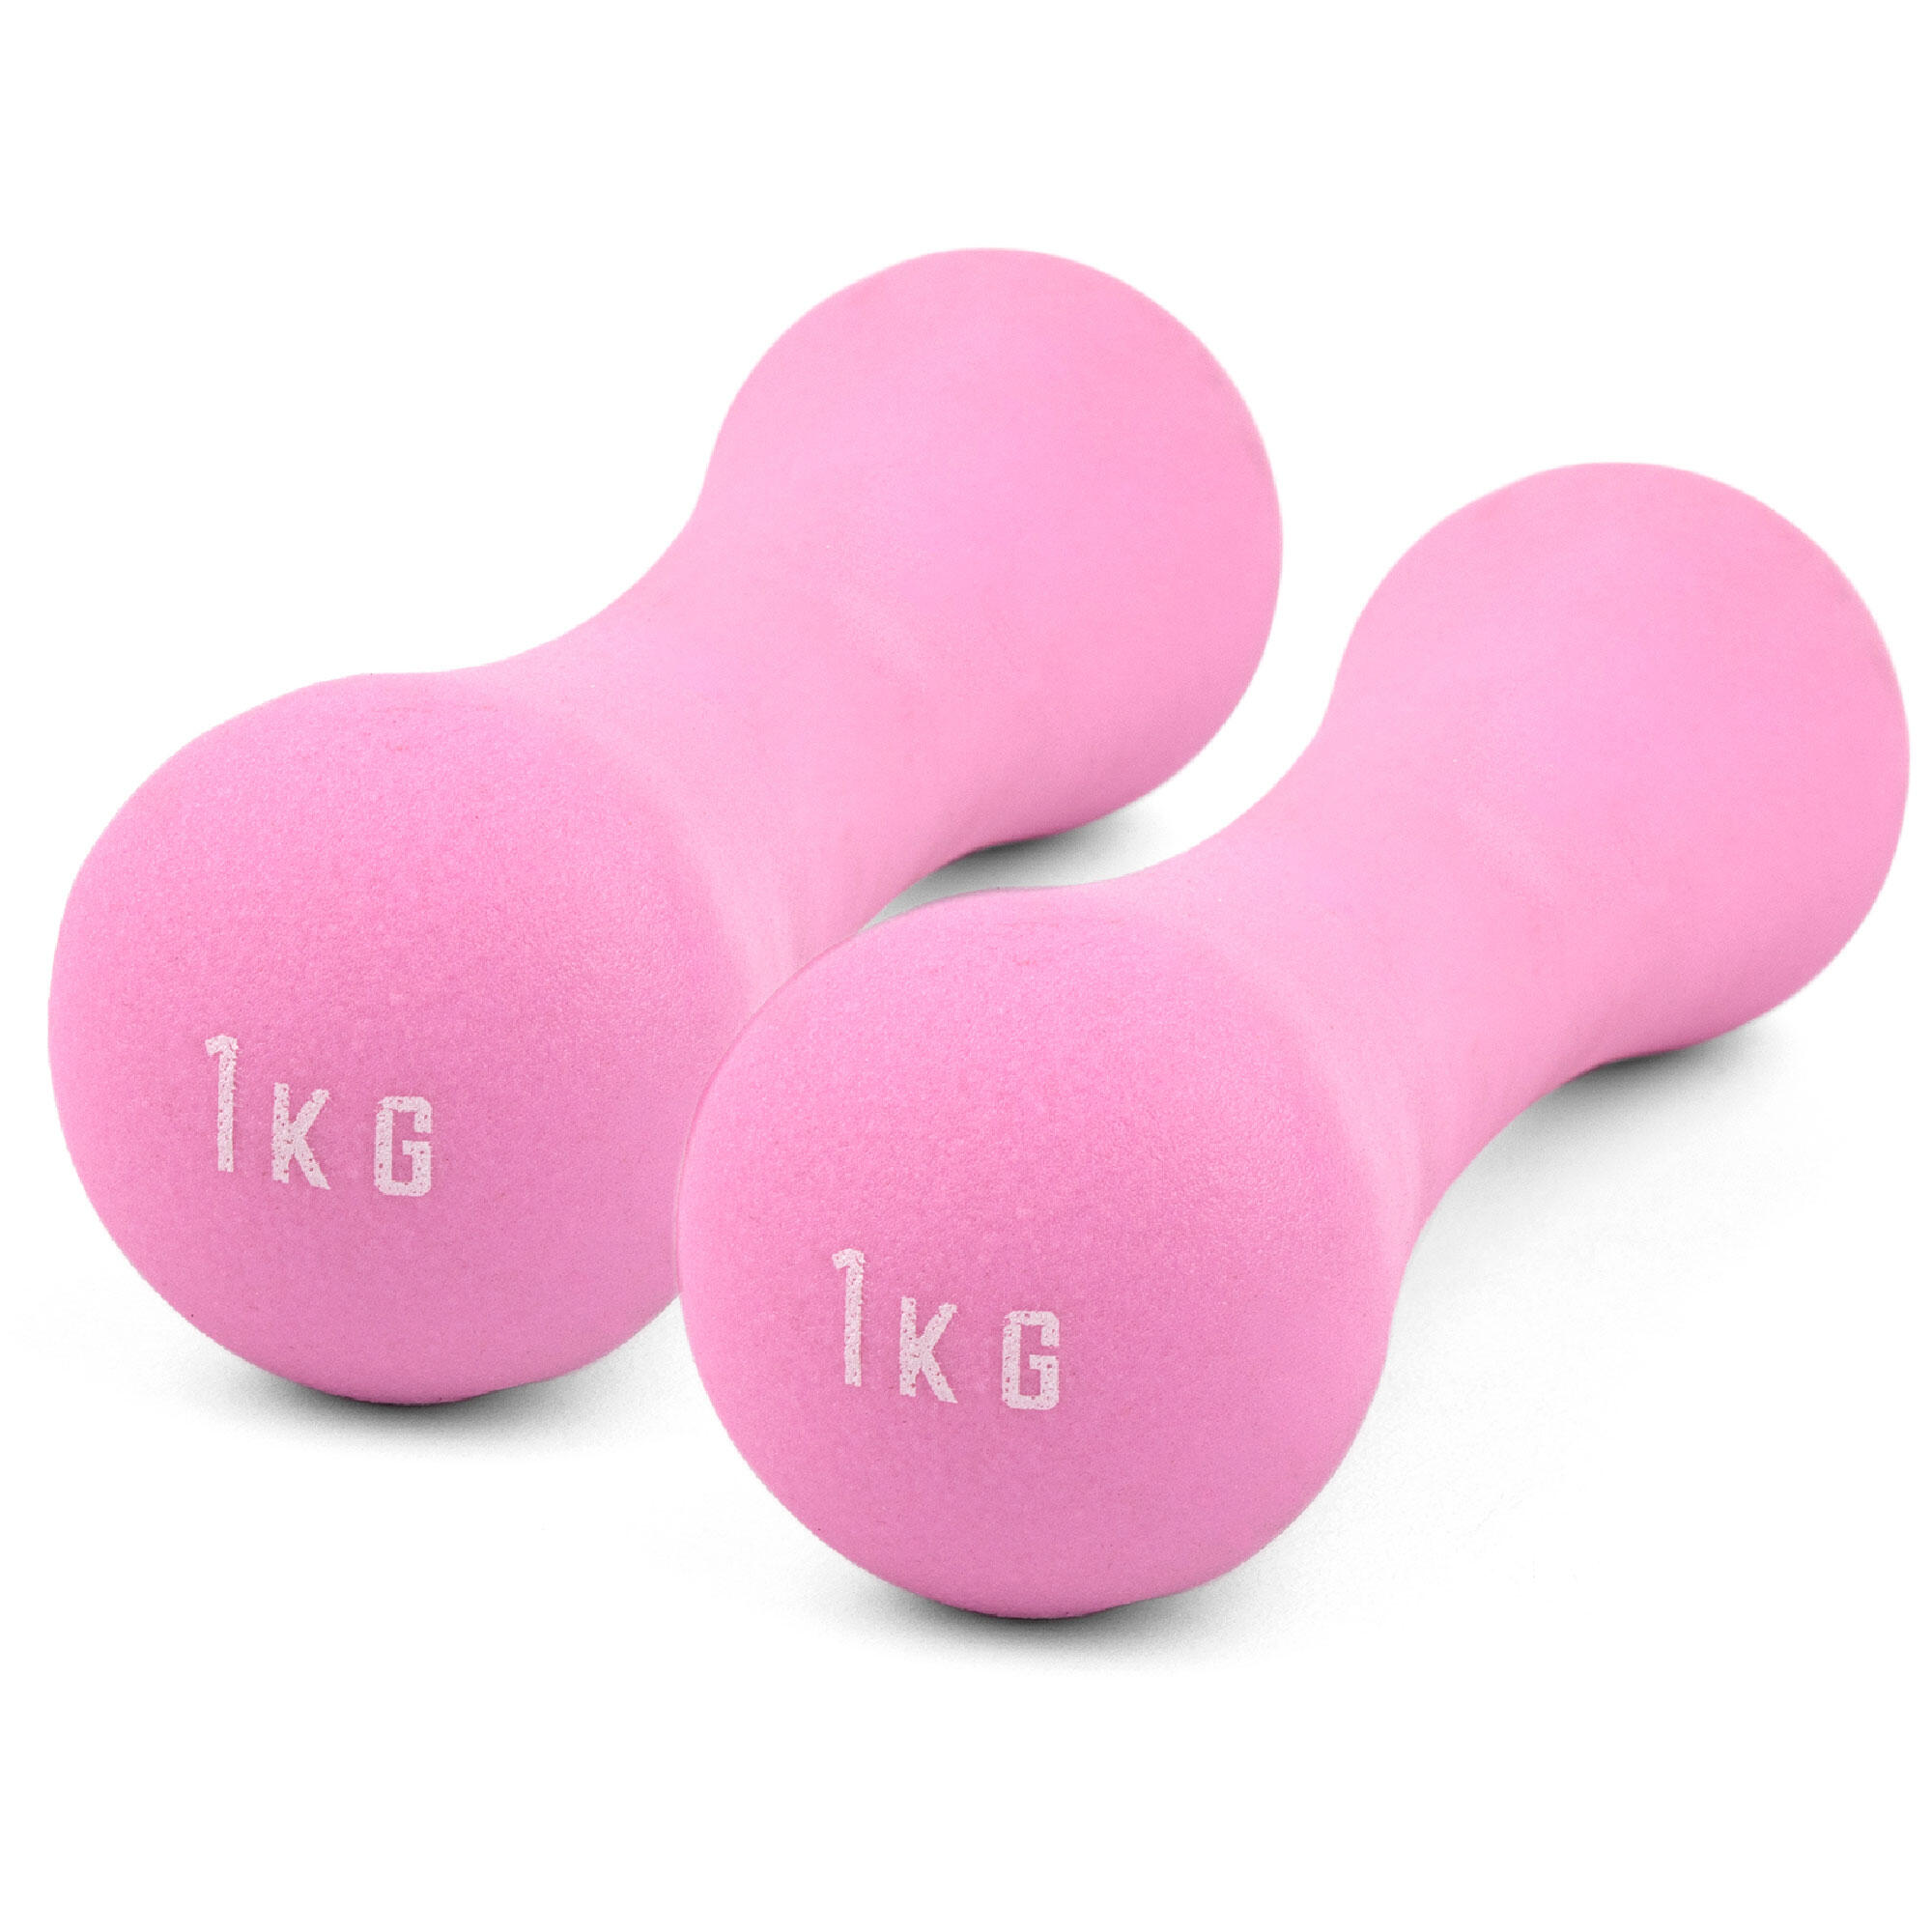 PHOENIX FITNESS Neoprene Dumbbell Weight - 1KG PAIR - Pink